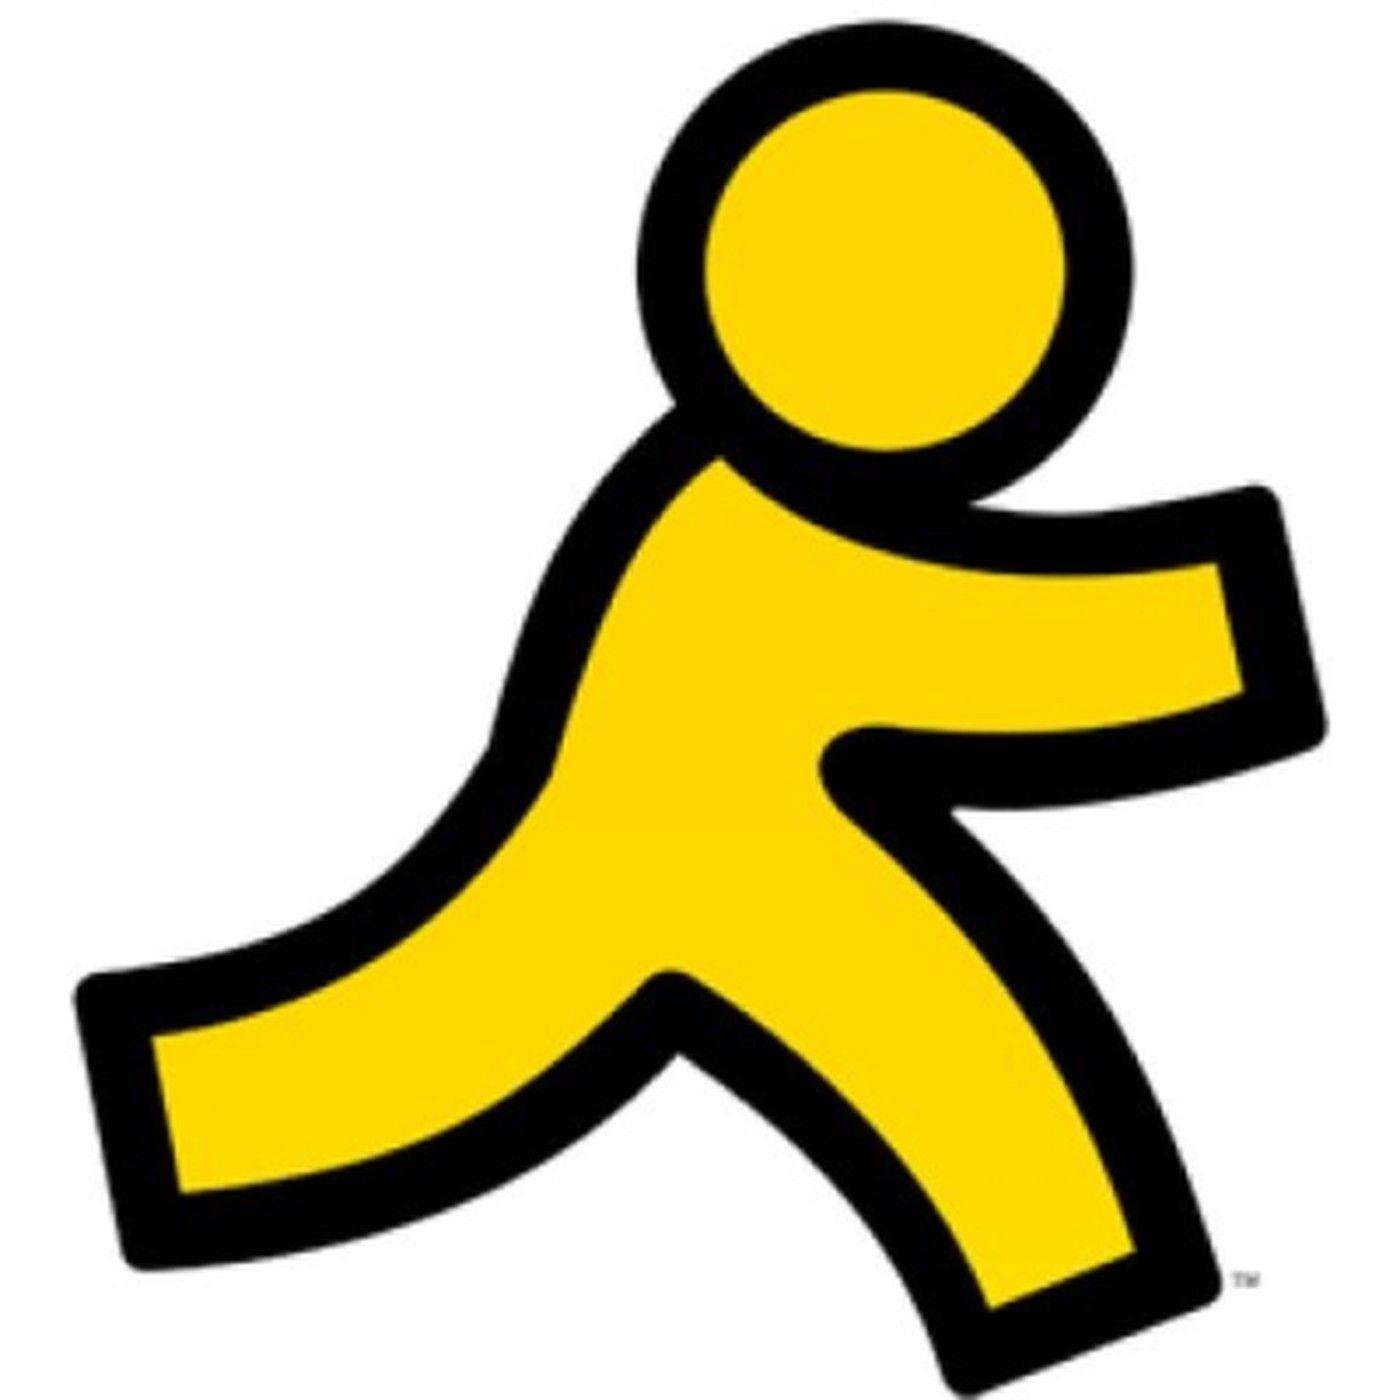 AOL Running Man Logo - AOL Instant Messenger developer team laid off, reports NYT - The Verge